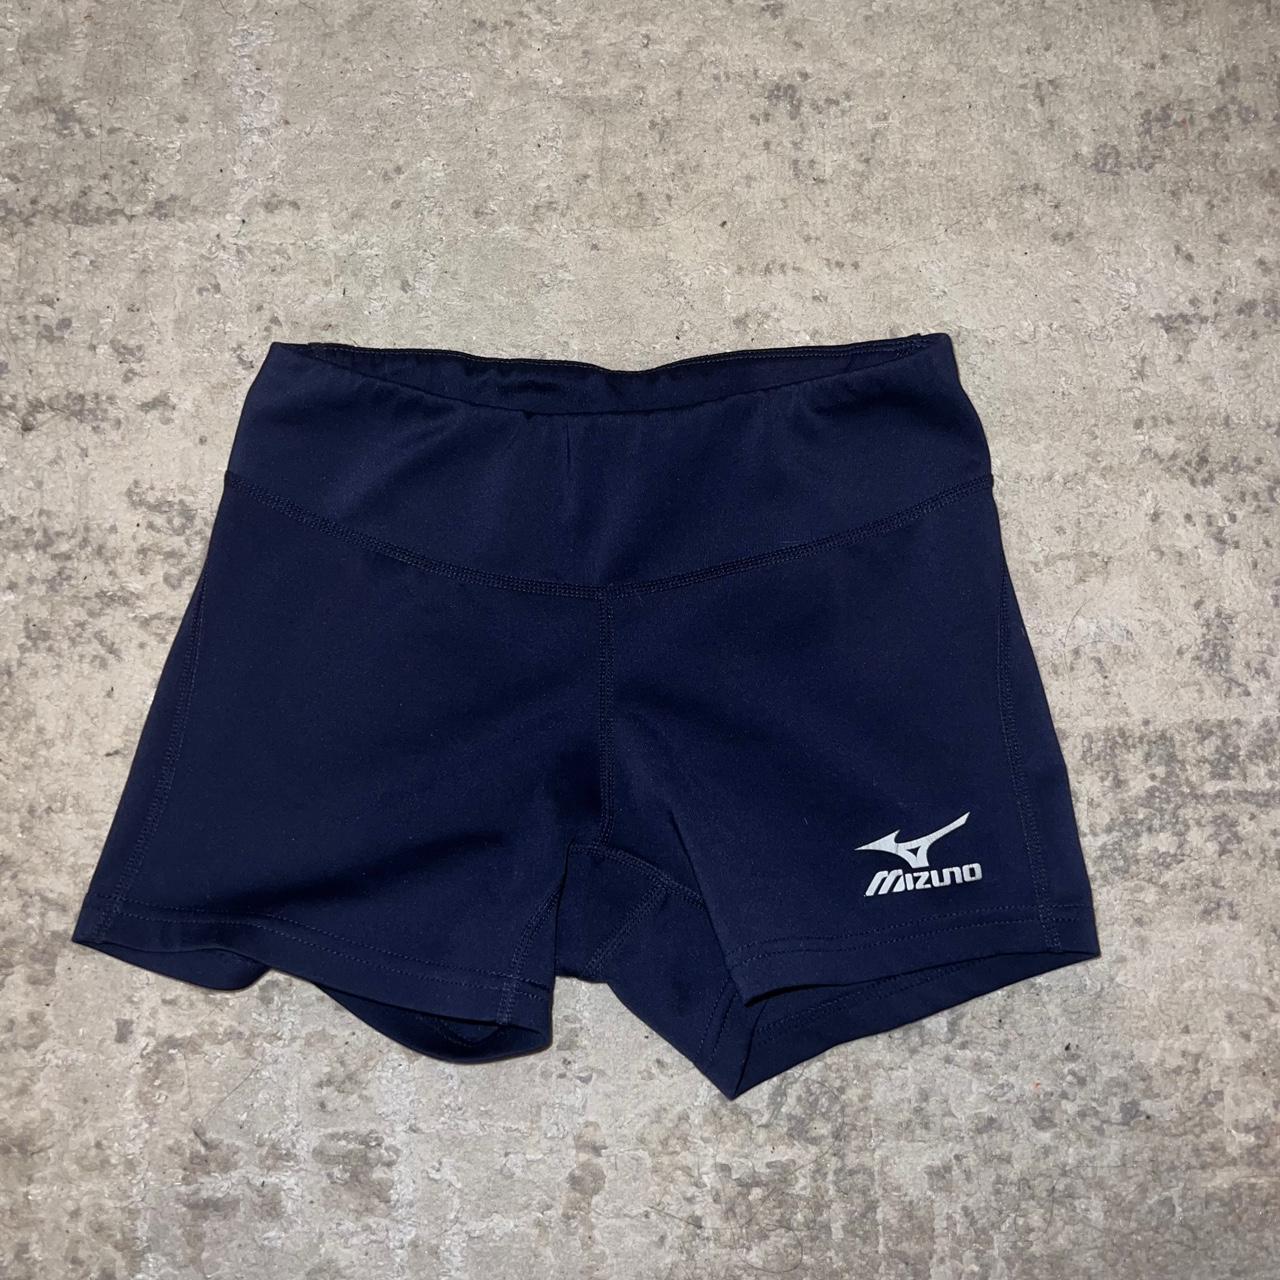 Mizuno Women's Navy Shorts